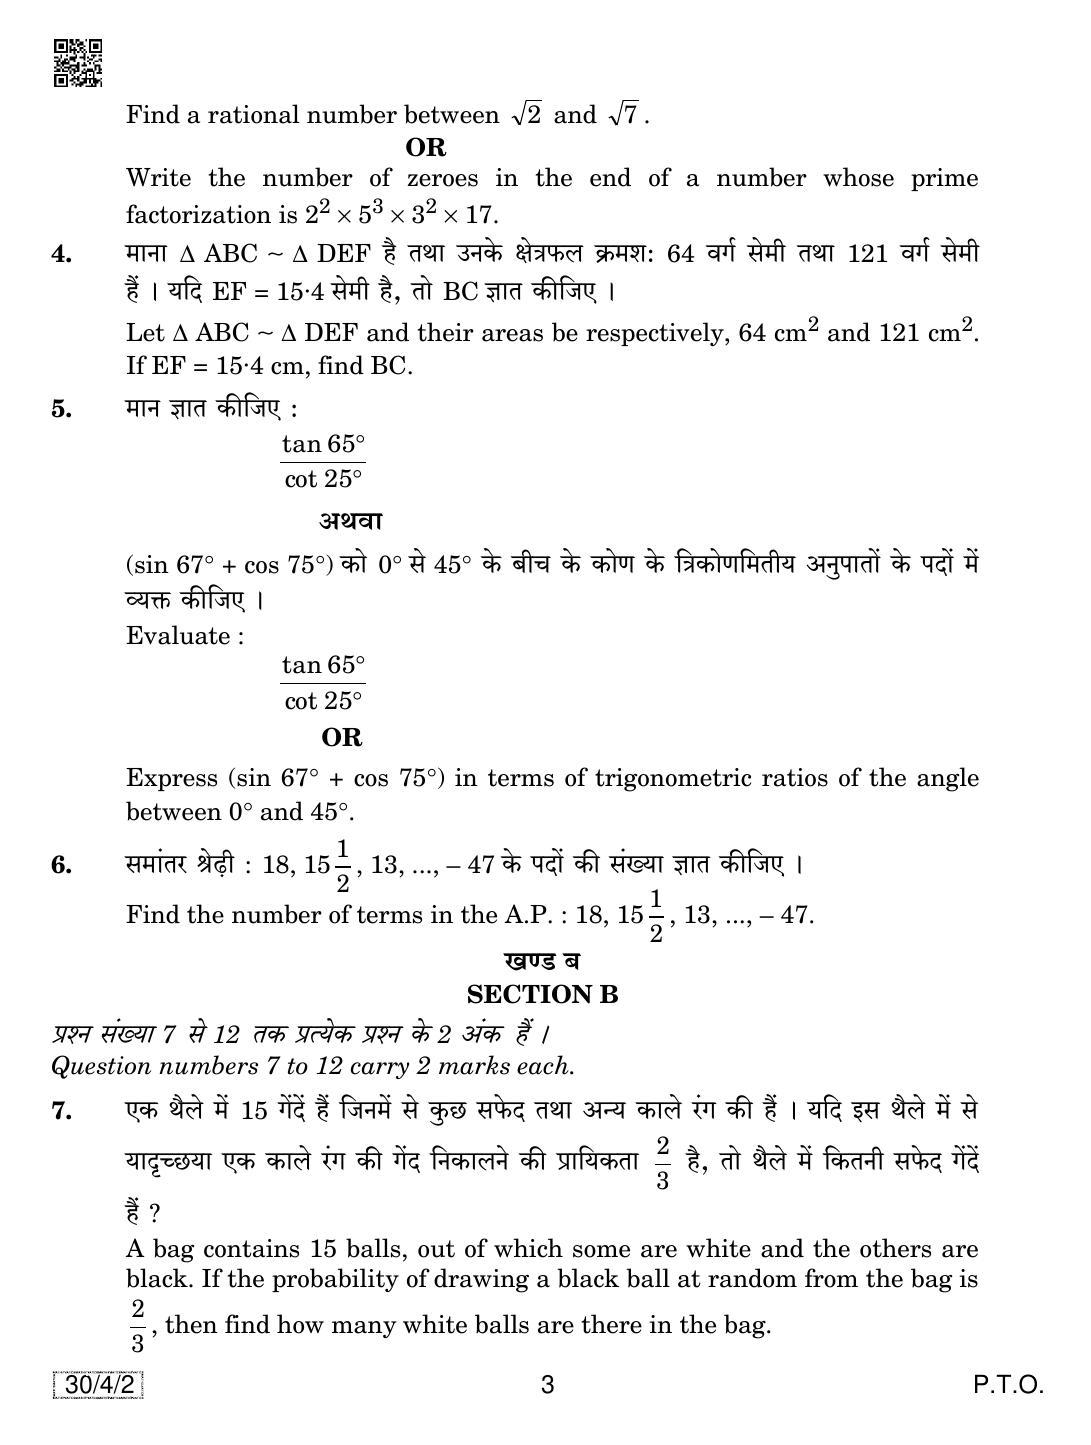 CBSE Class 10 Maths (30/4/2 - SET 2) 2019 Question Paper - Page 3